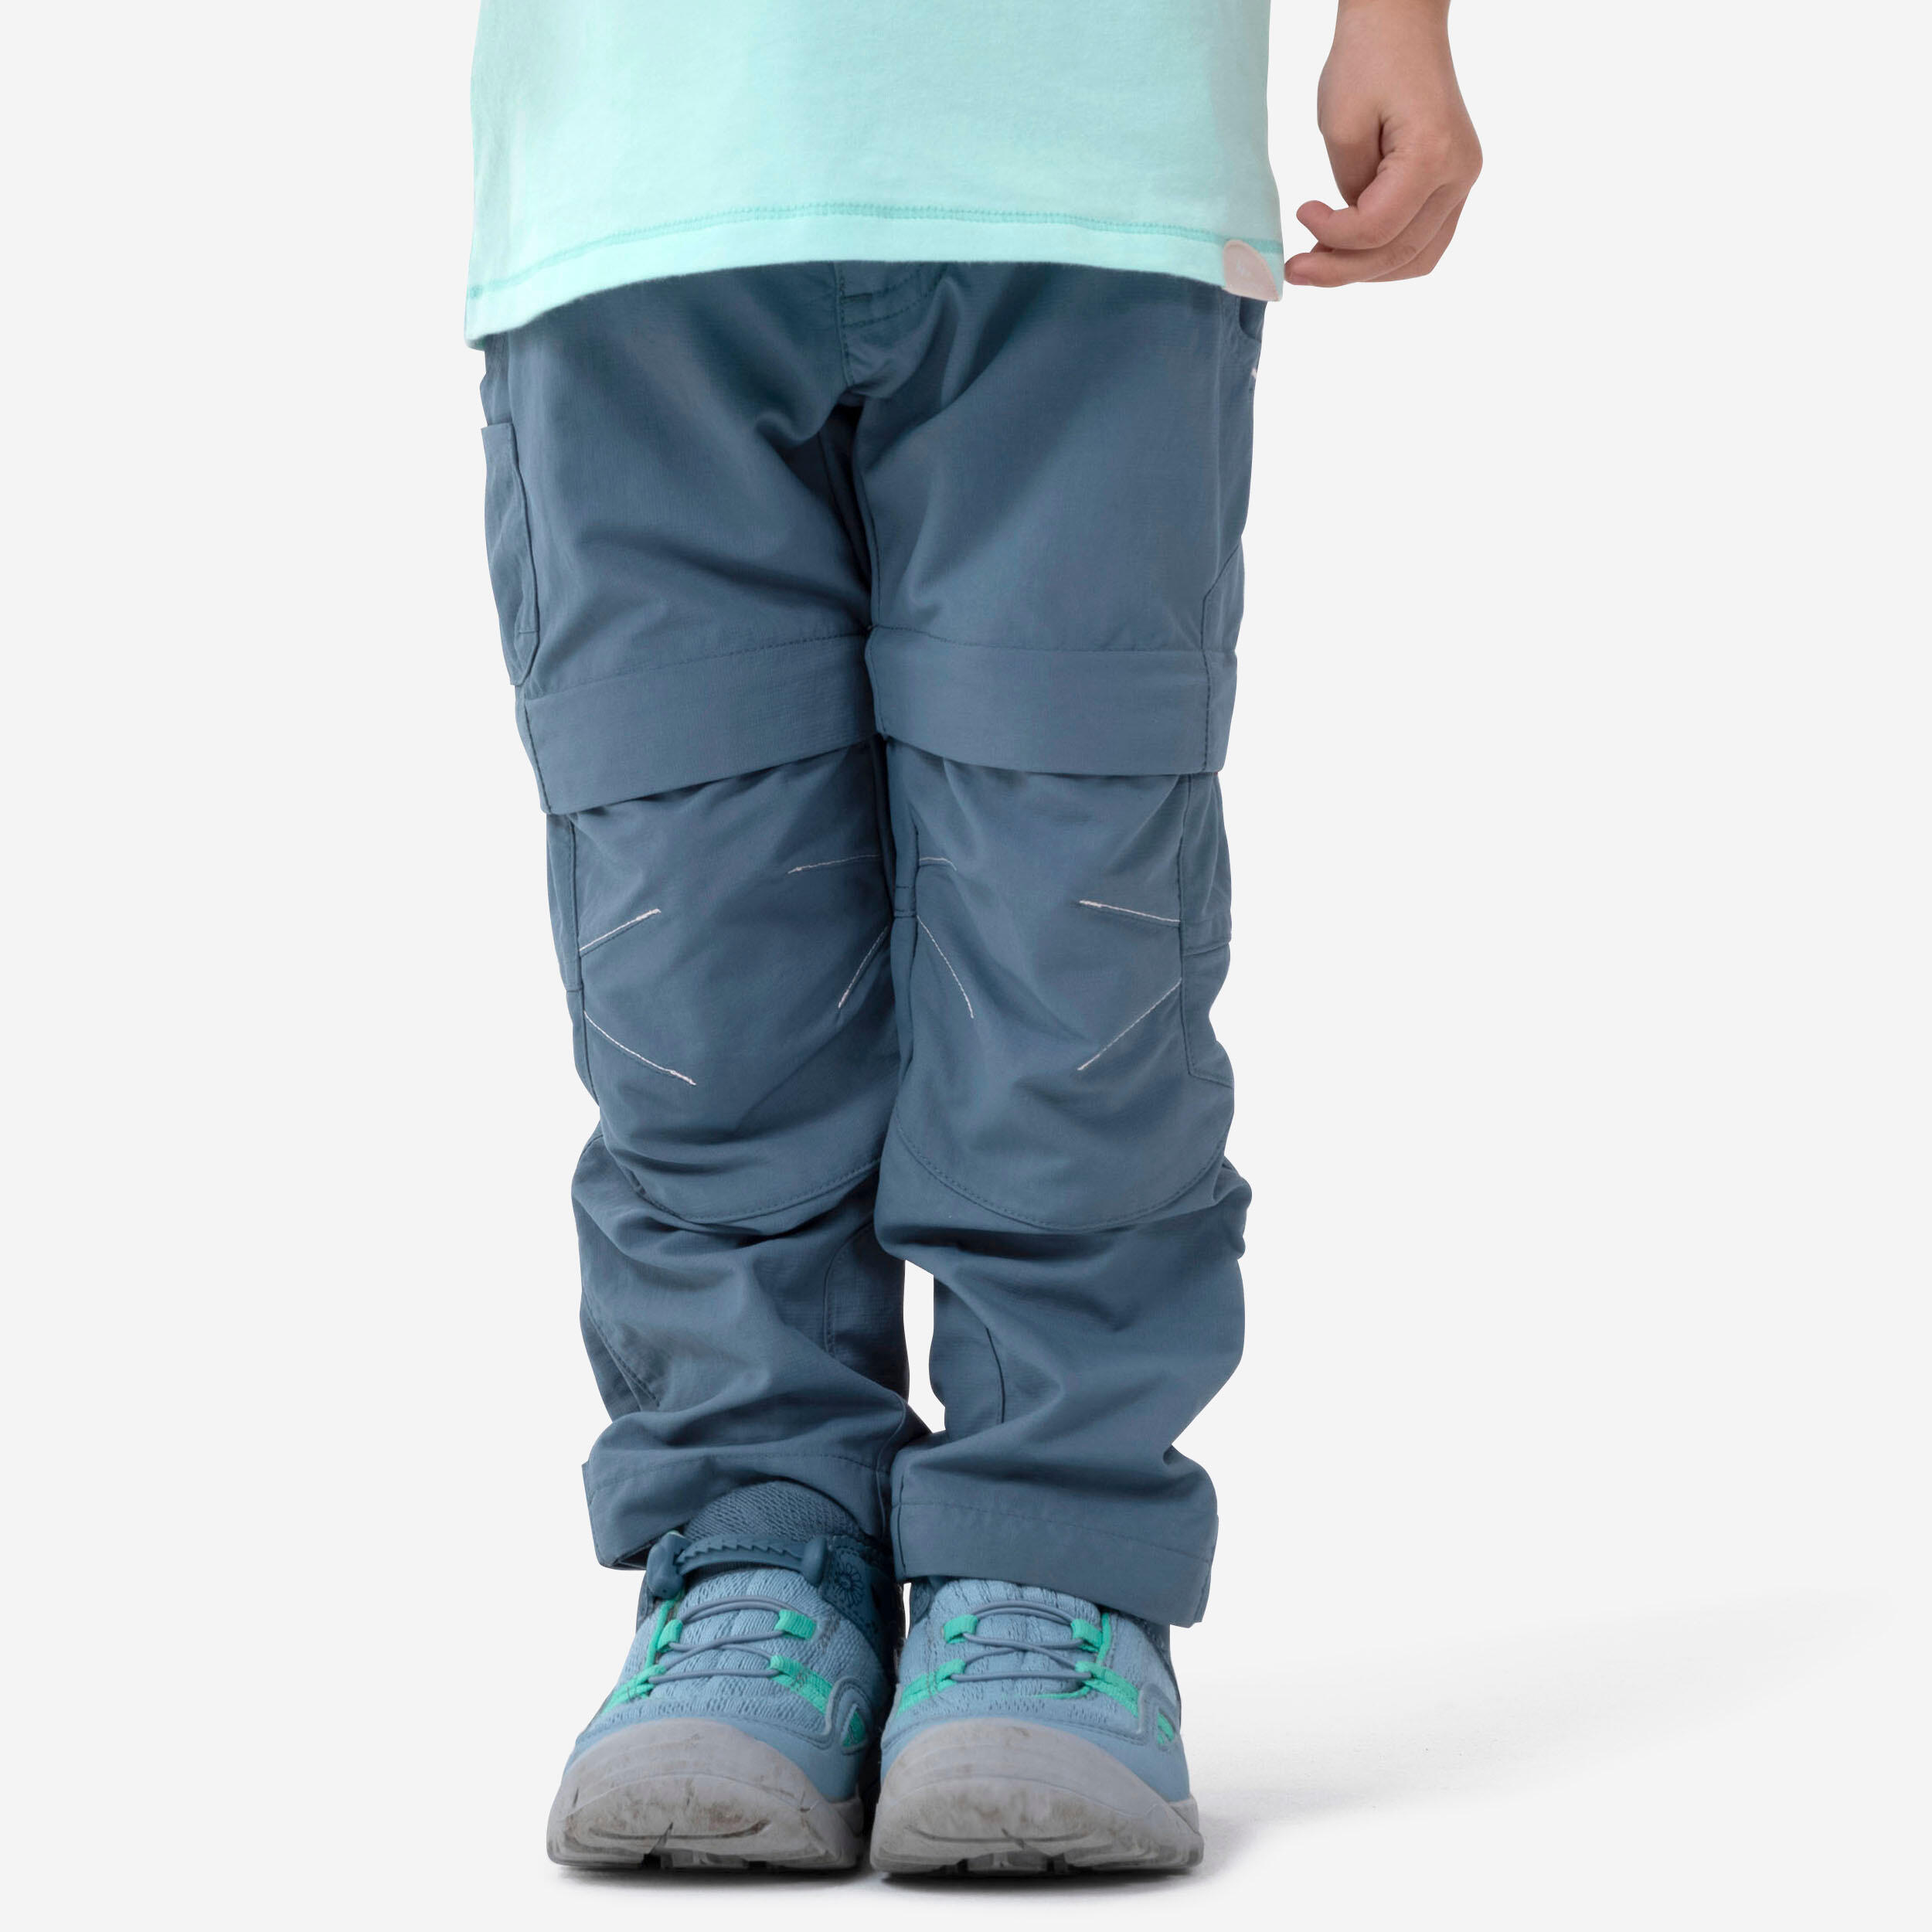 Kids’ Modular Hiking Trousers - MH500 KID Aged 2-6 YEARS 1/6